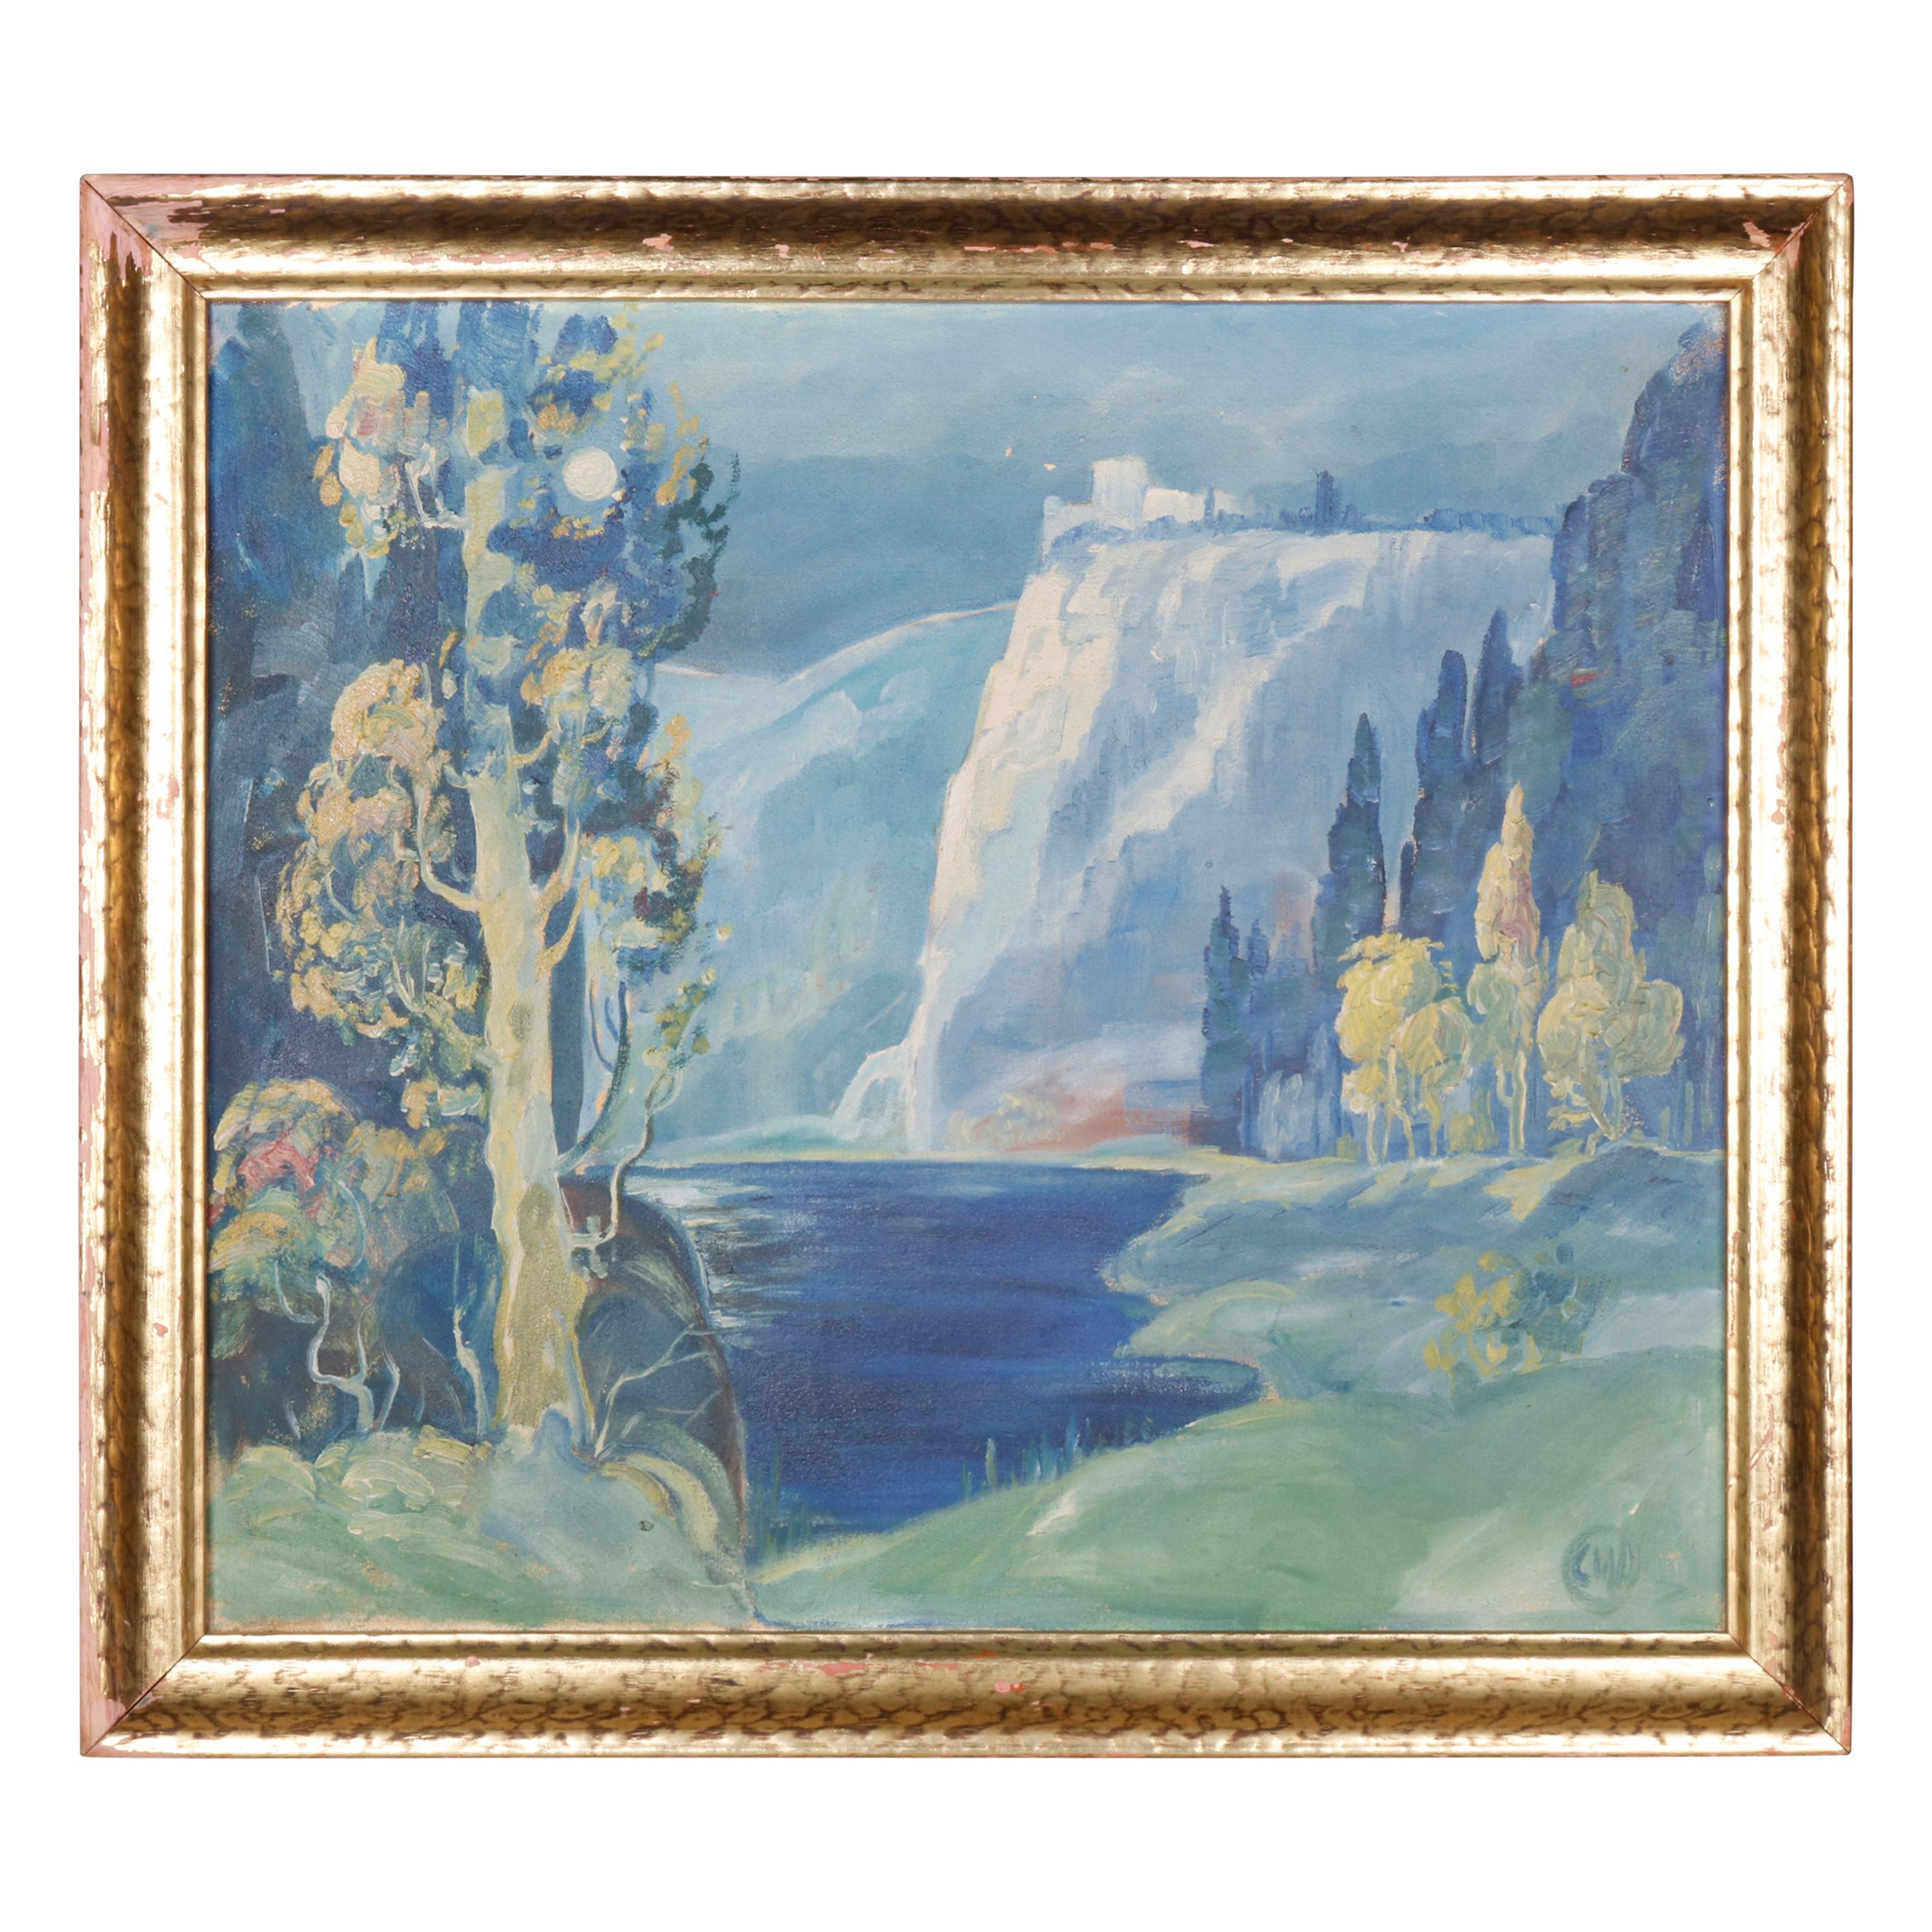 Antique Arts & Crafts Impressionist Oil on Canvas Landscape Painting, circa 1930